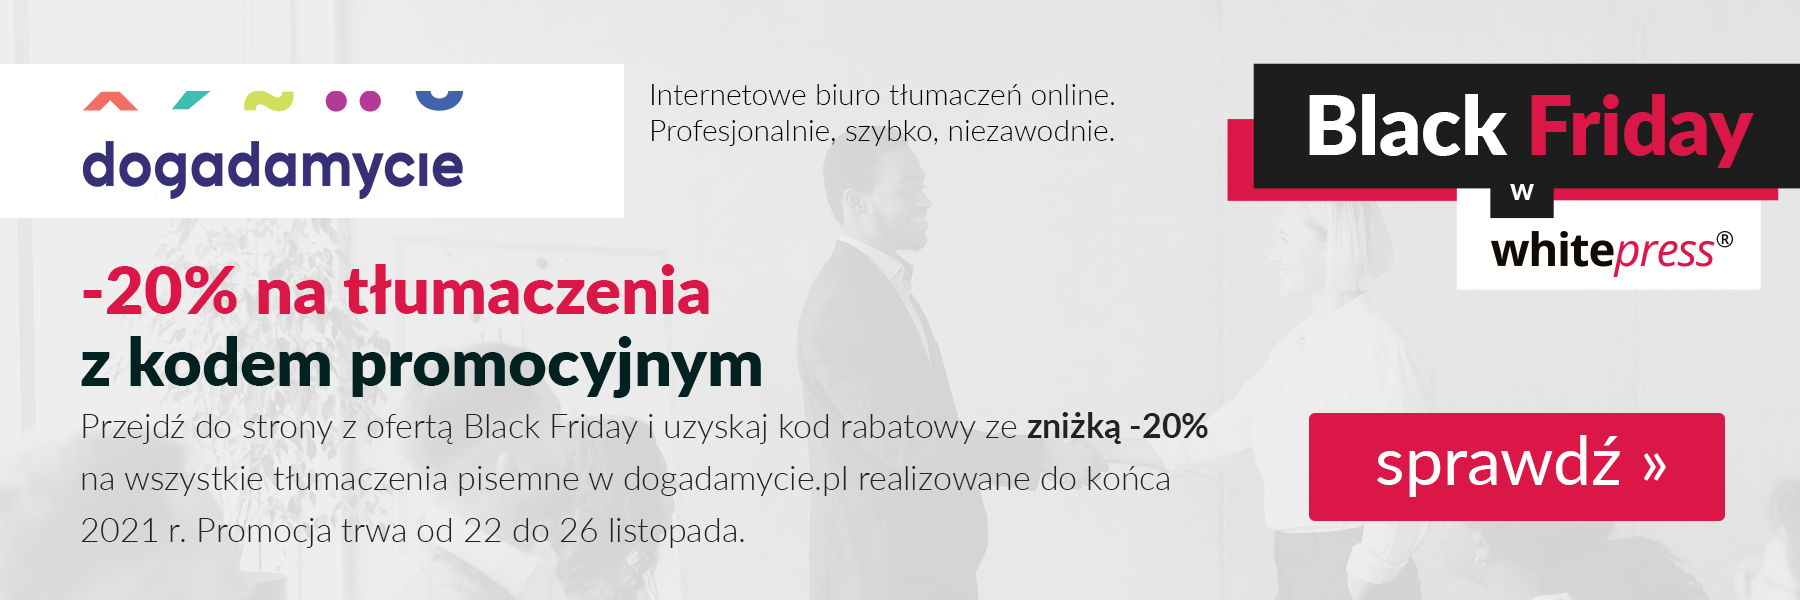 Dogadamycie.pl promocja na Black Friday